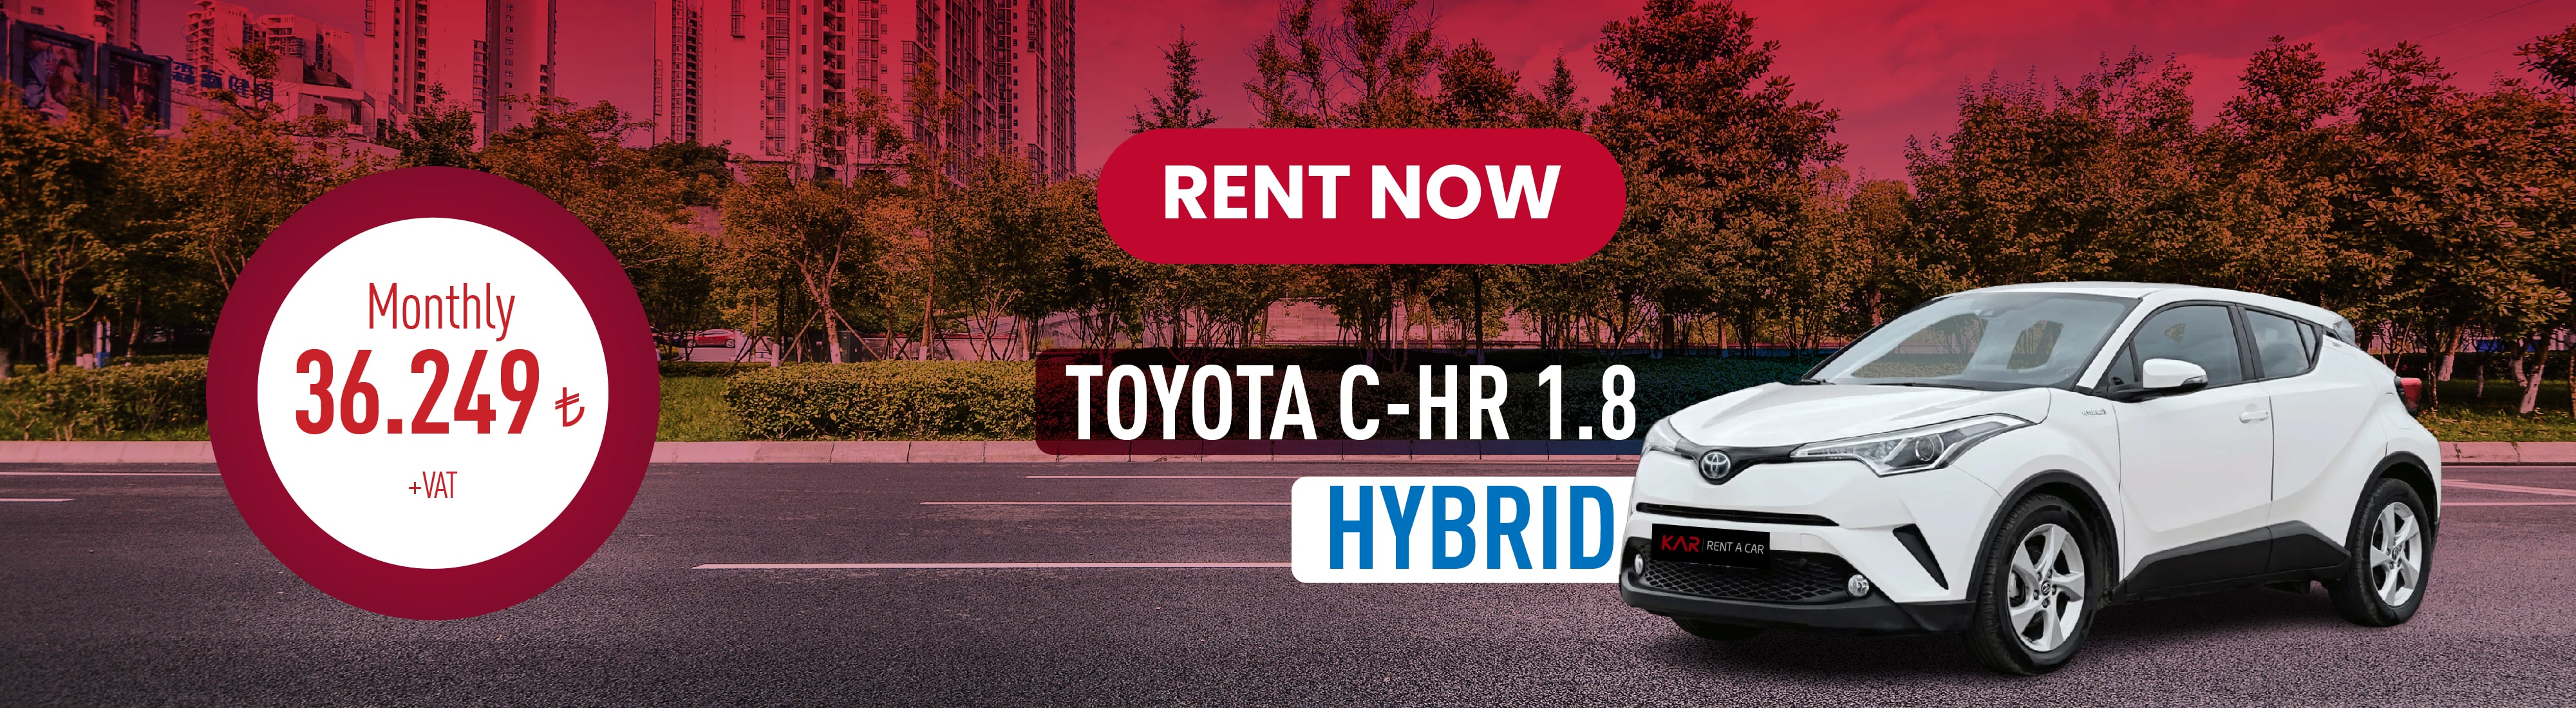 Toyota C-HR Campaign